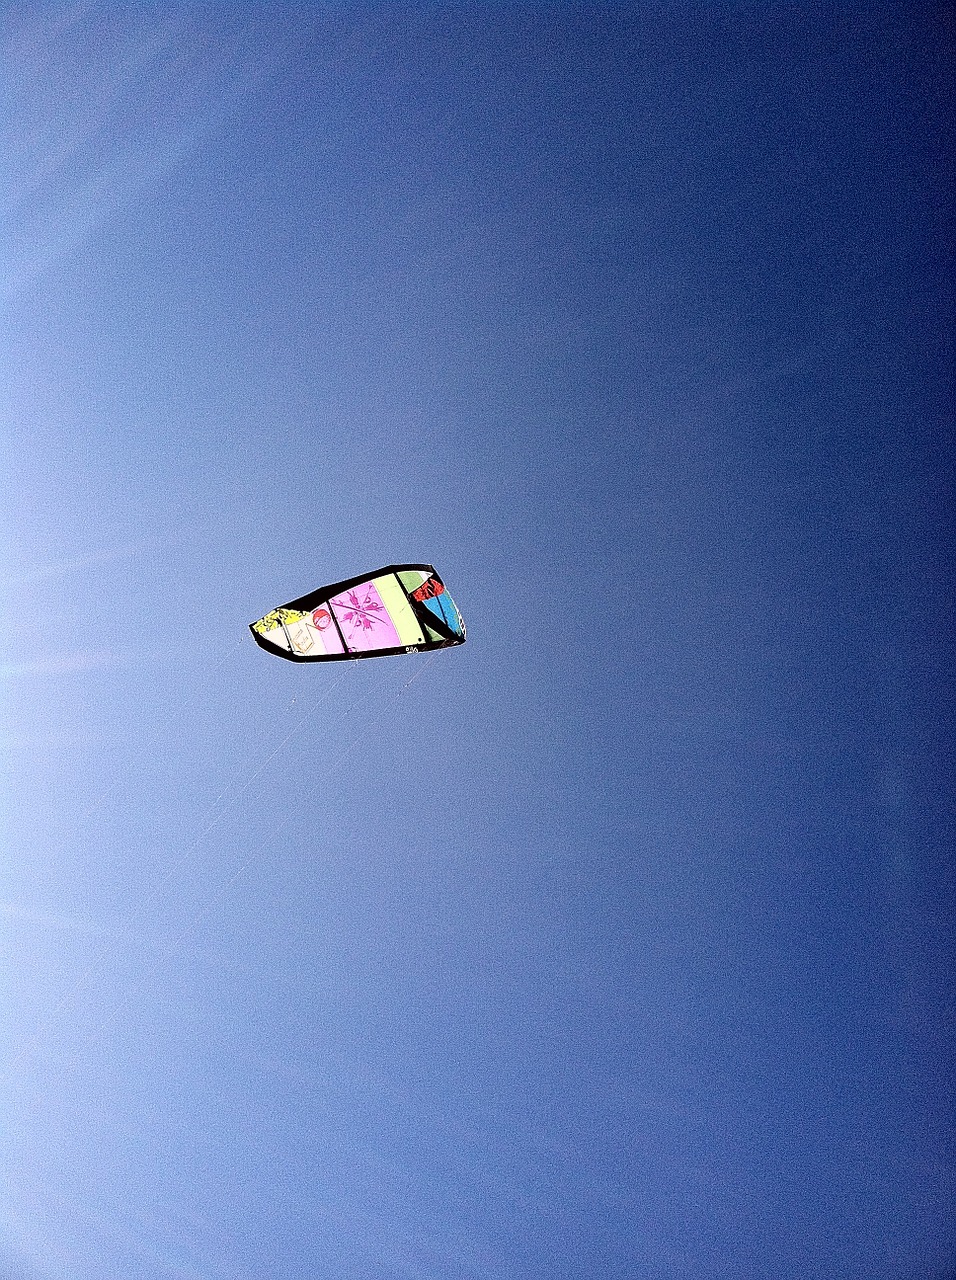 kitesurfing beach wind free photo